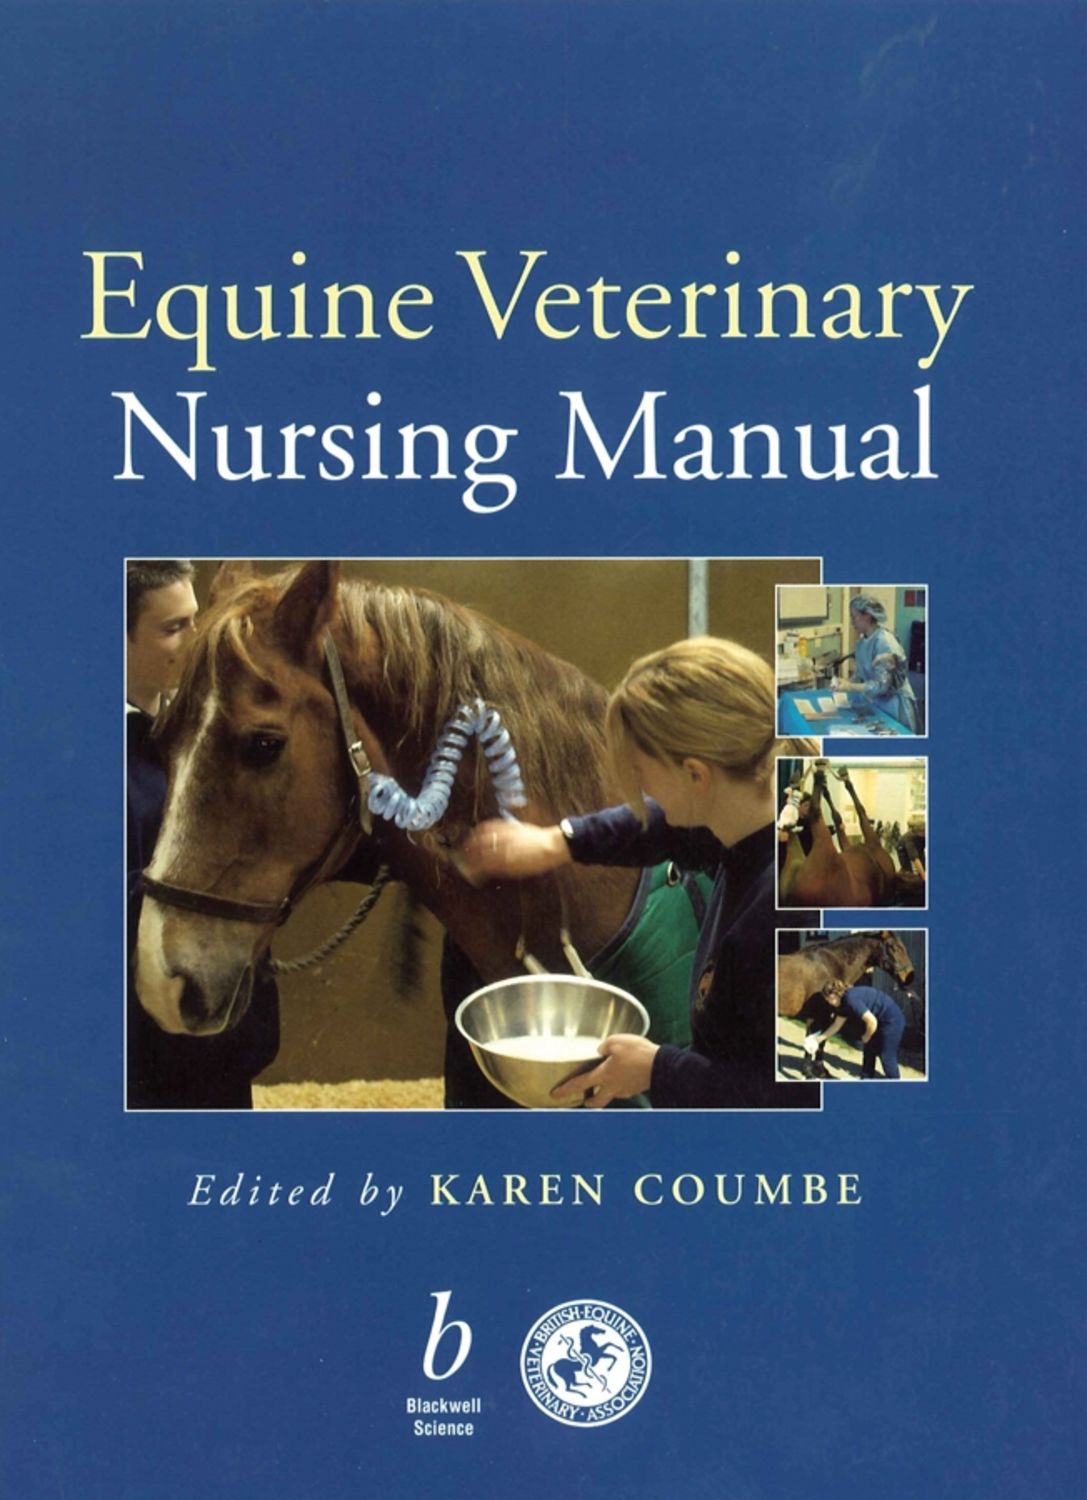 Equine Veterinary Nursing Manual read online at LitRes